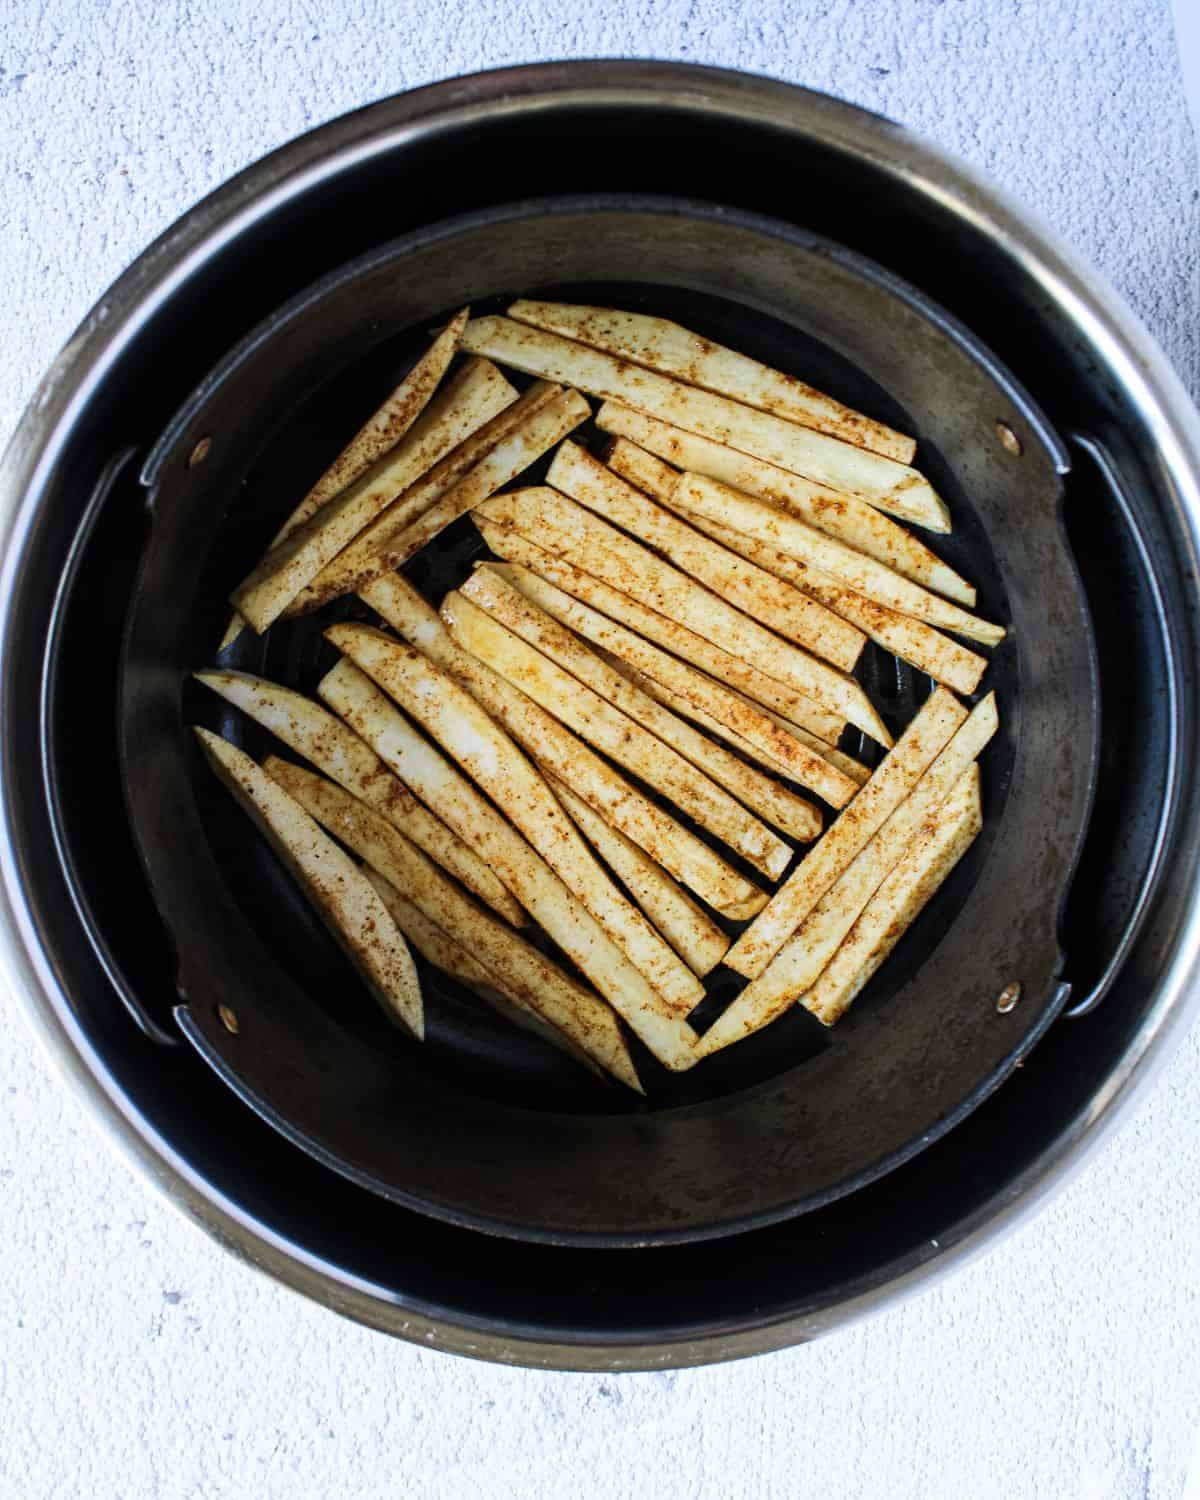 Sweet potato fries in the air-fryer basket.